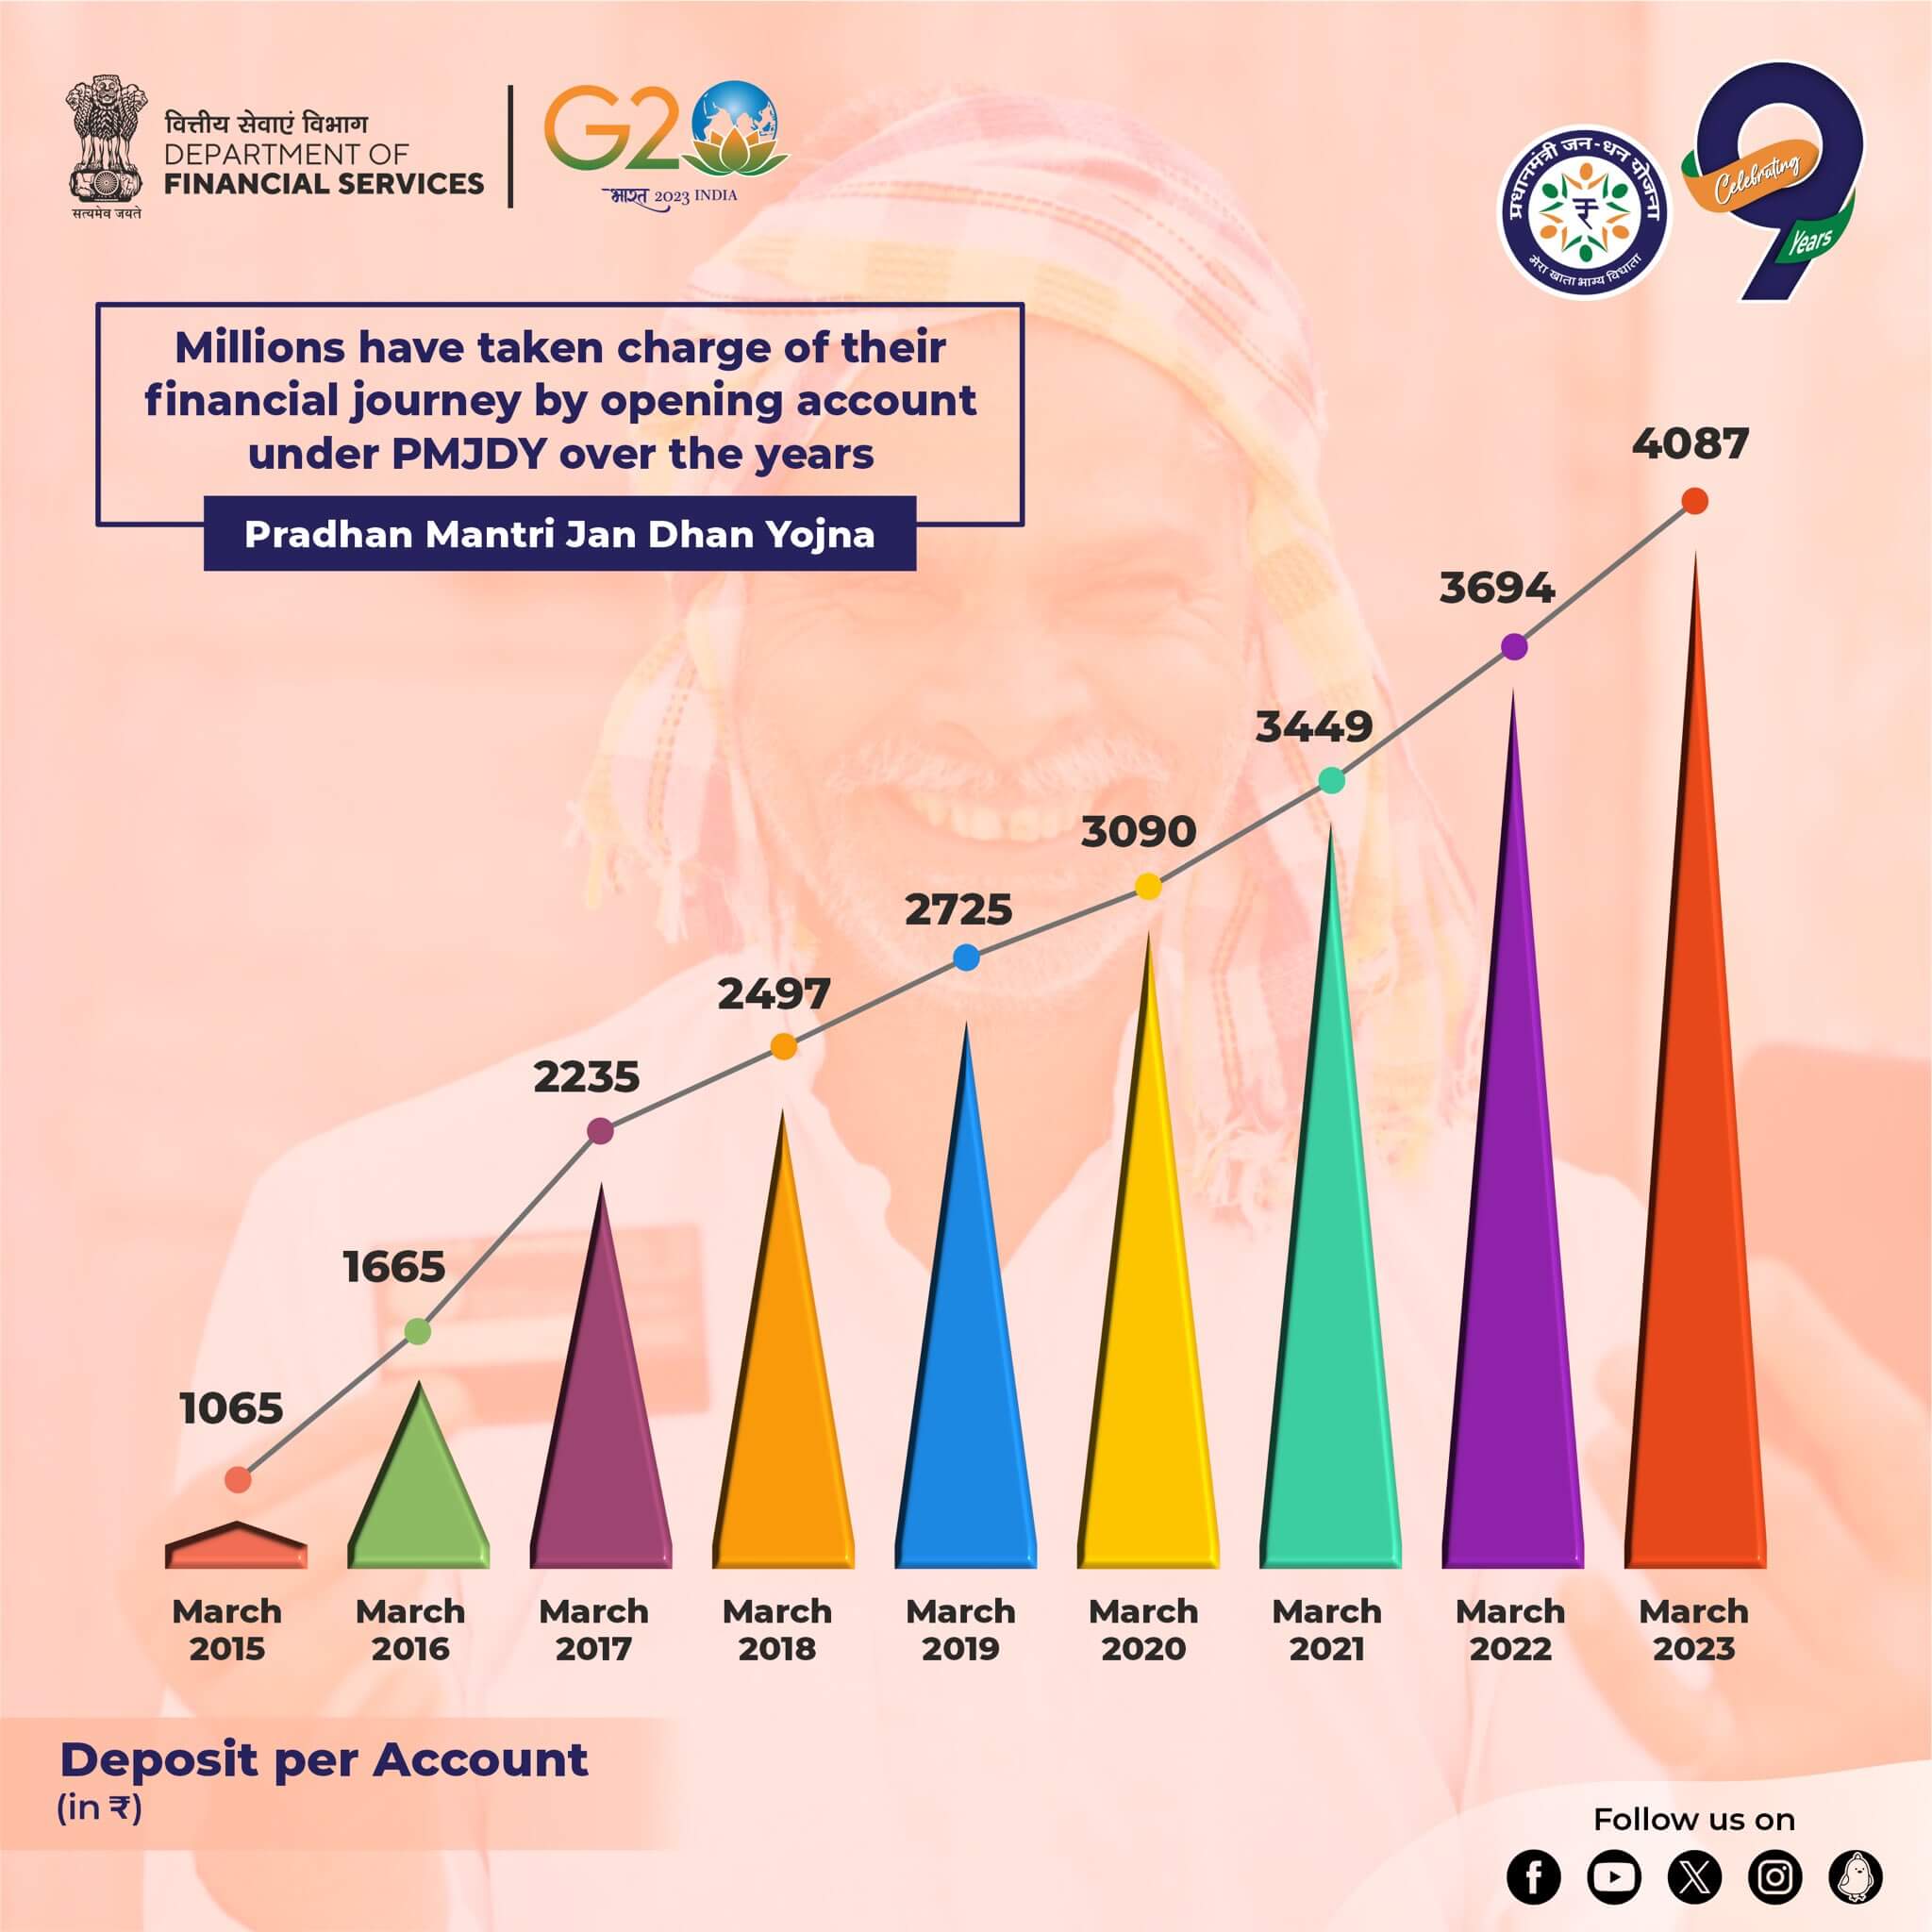 Average Deposit per PMJDY Account